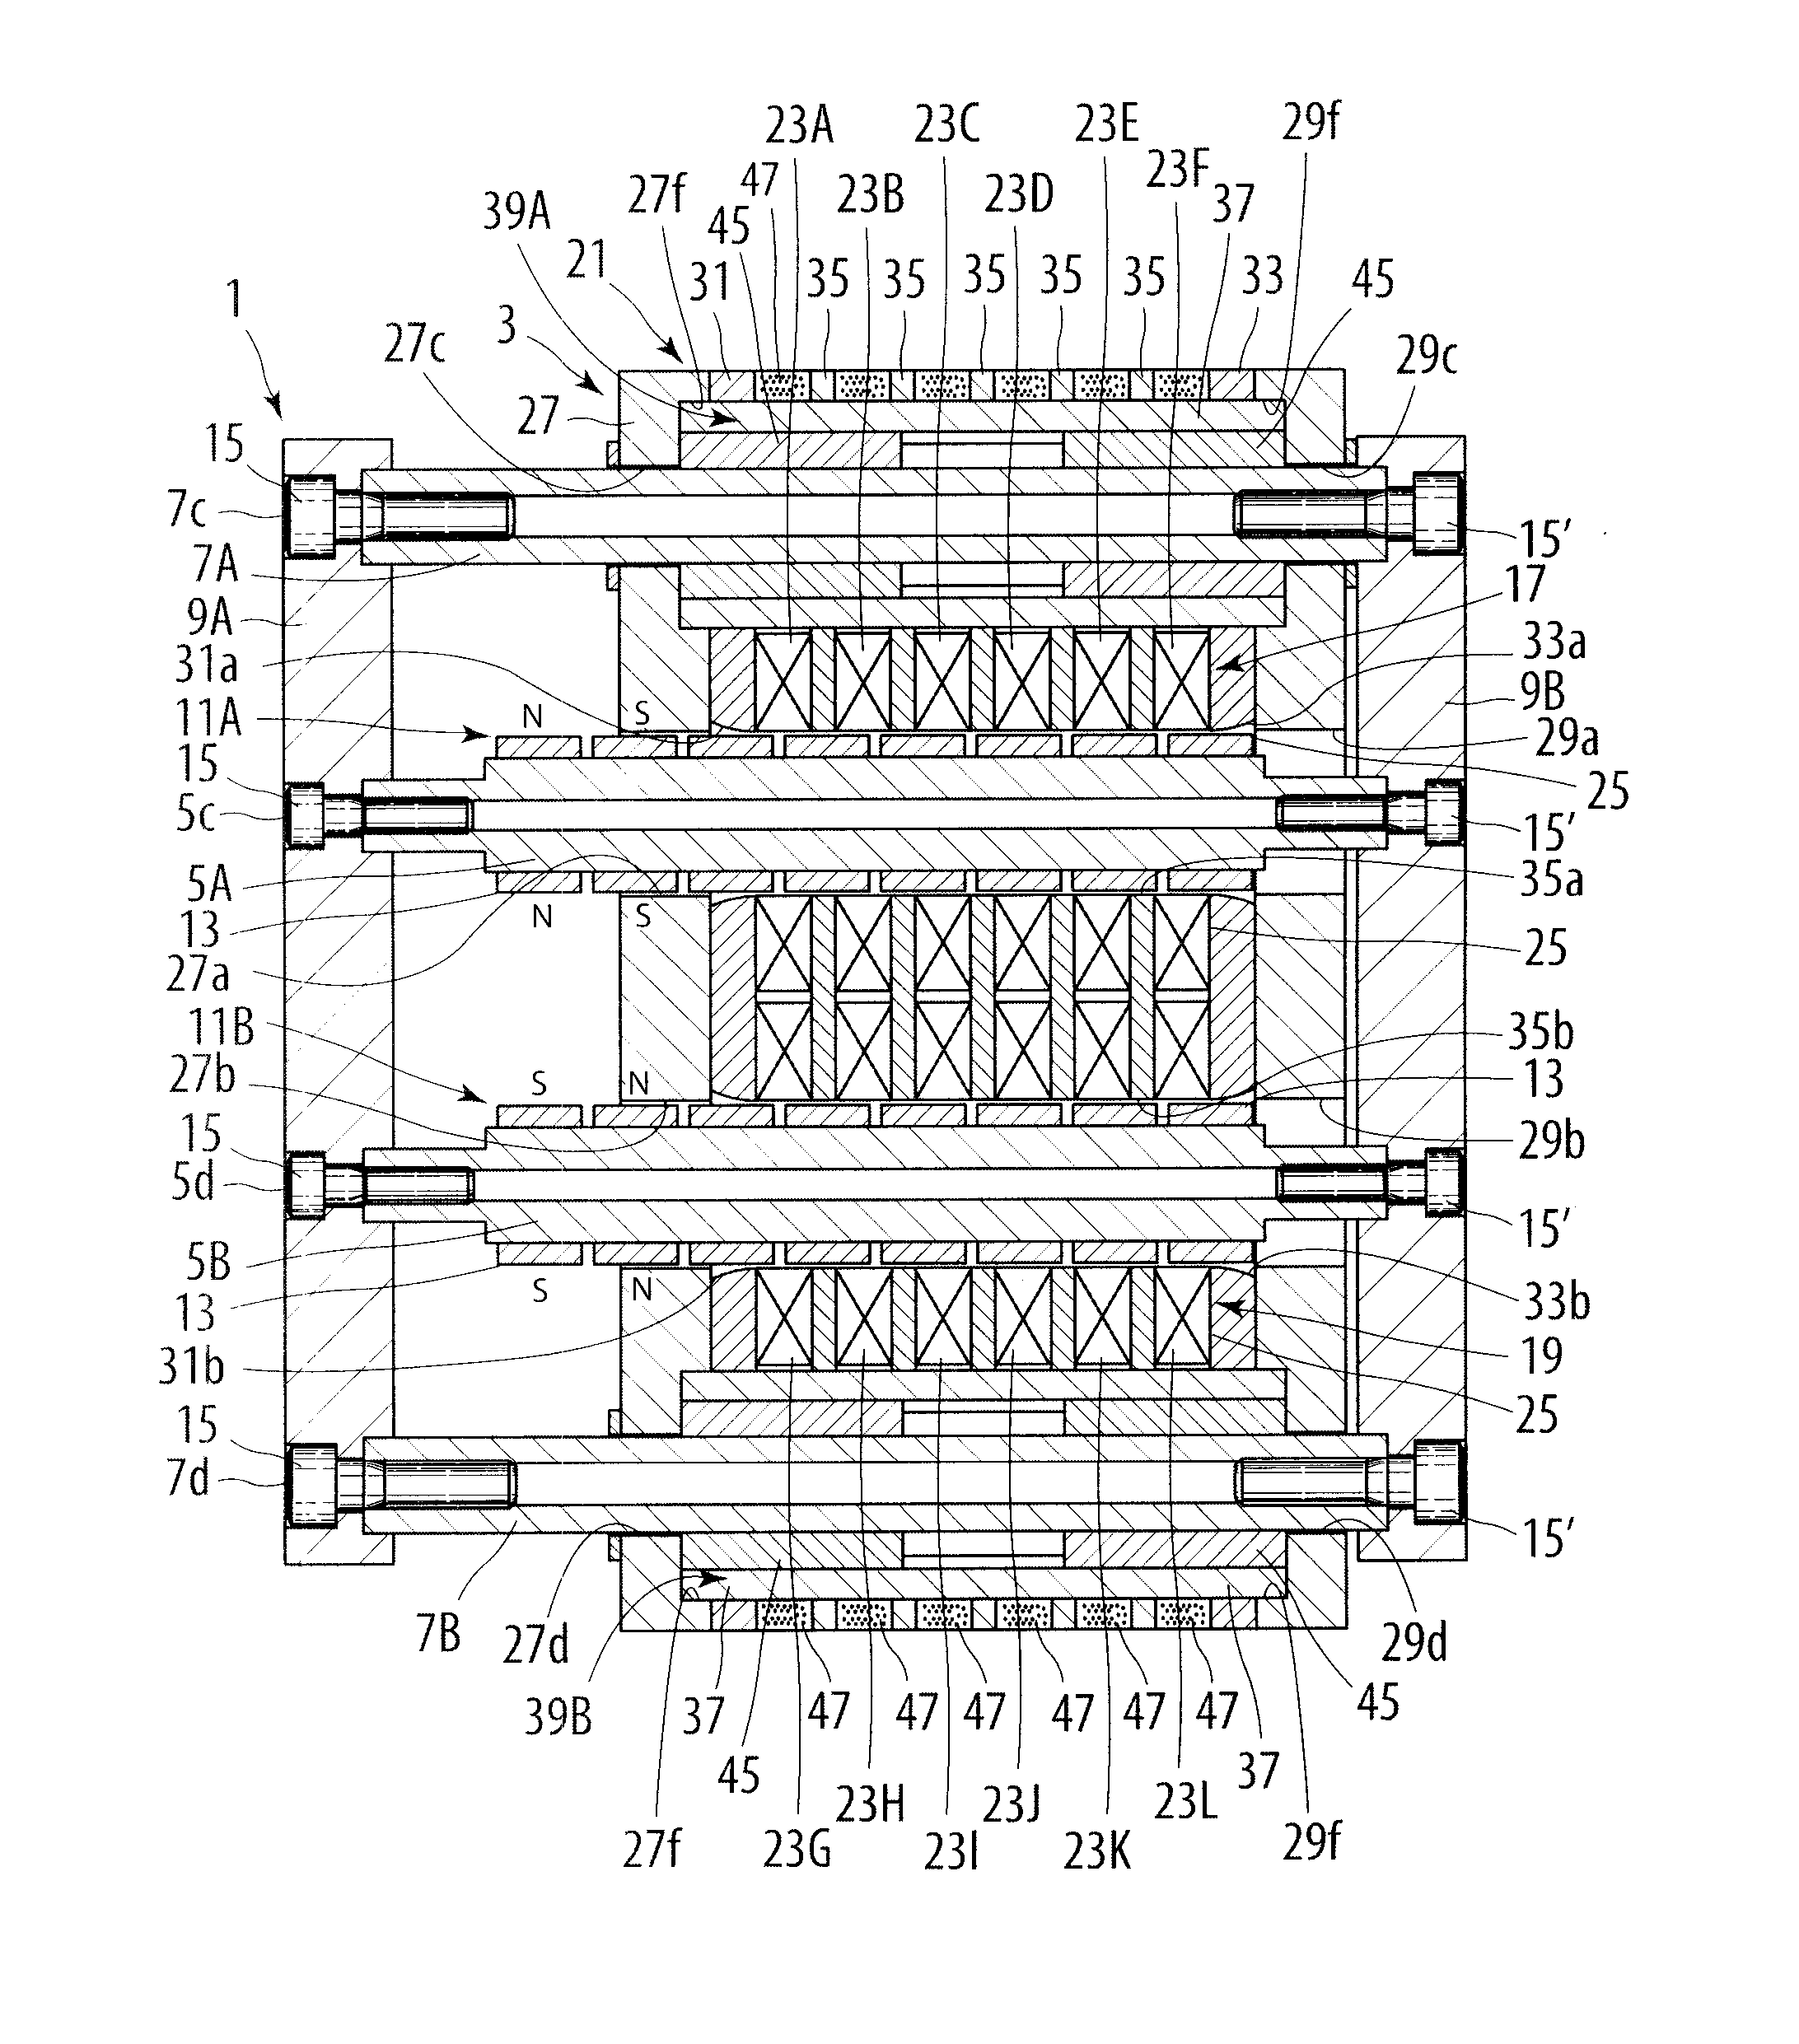 Linear synchronous motor